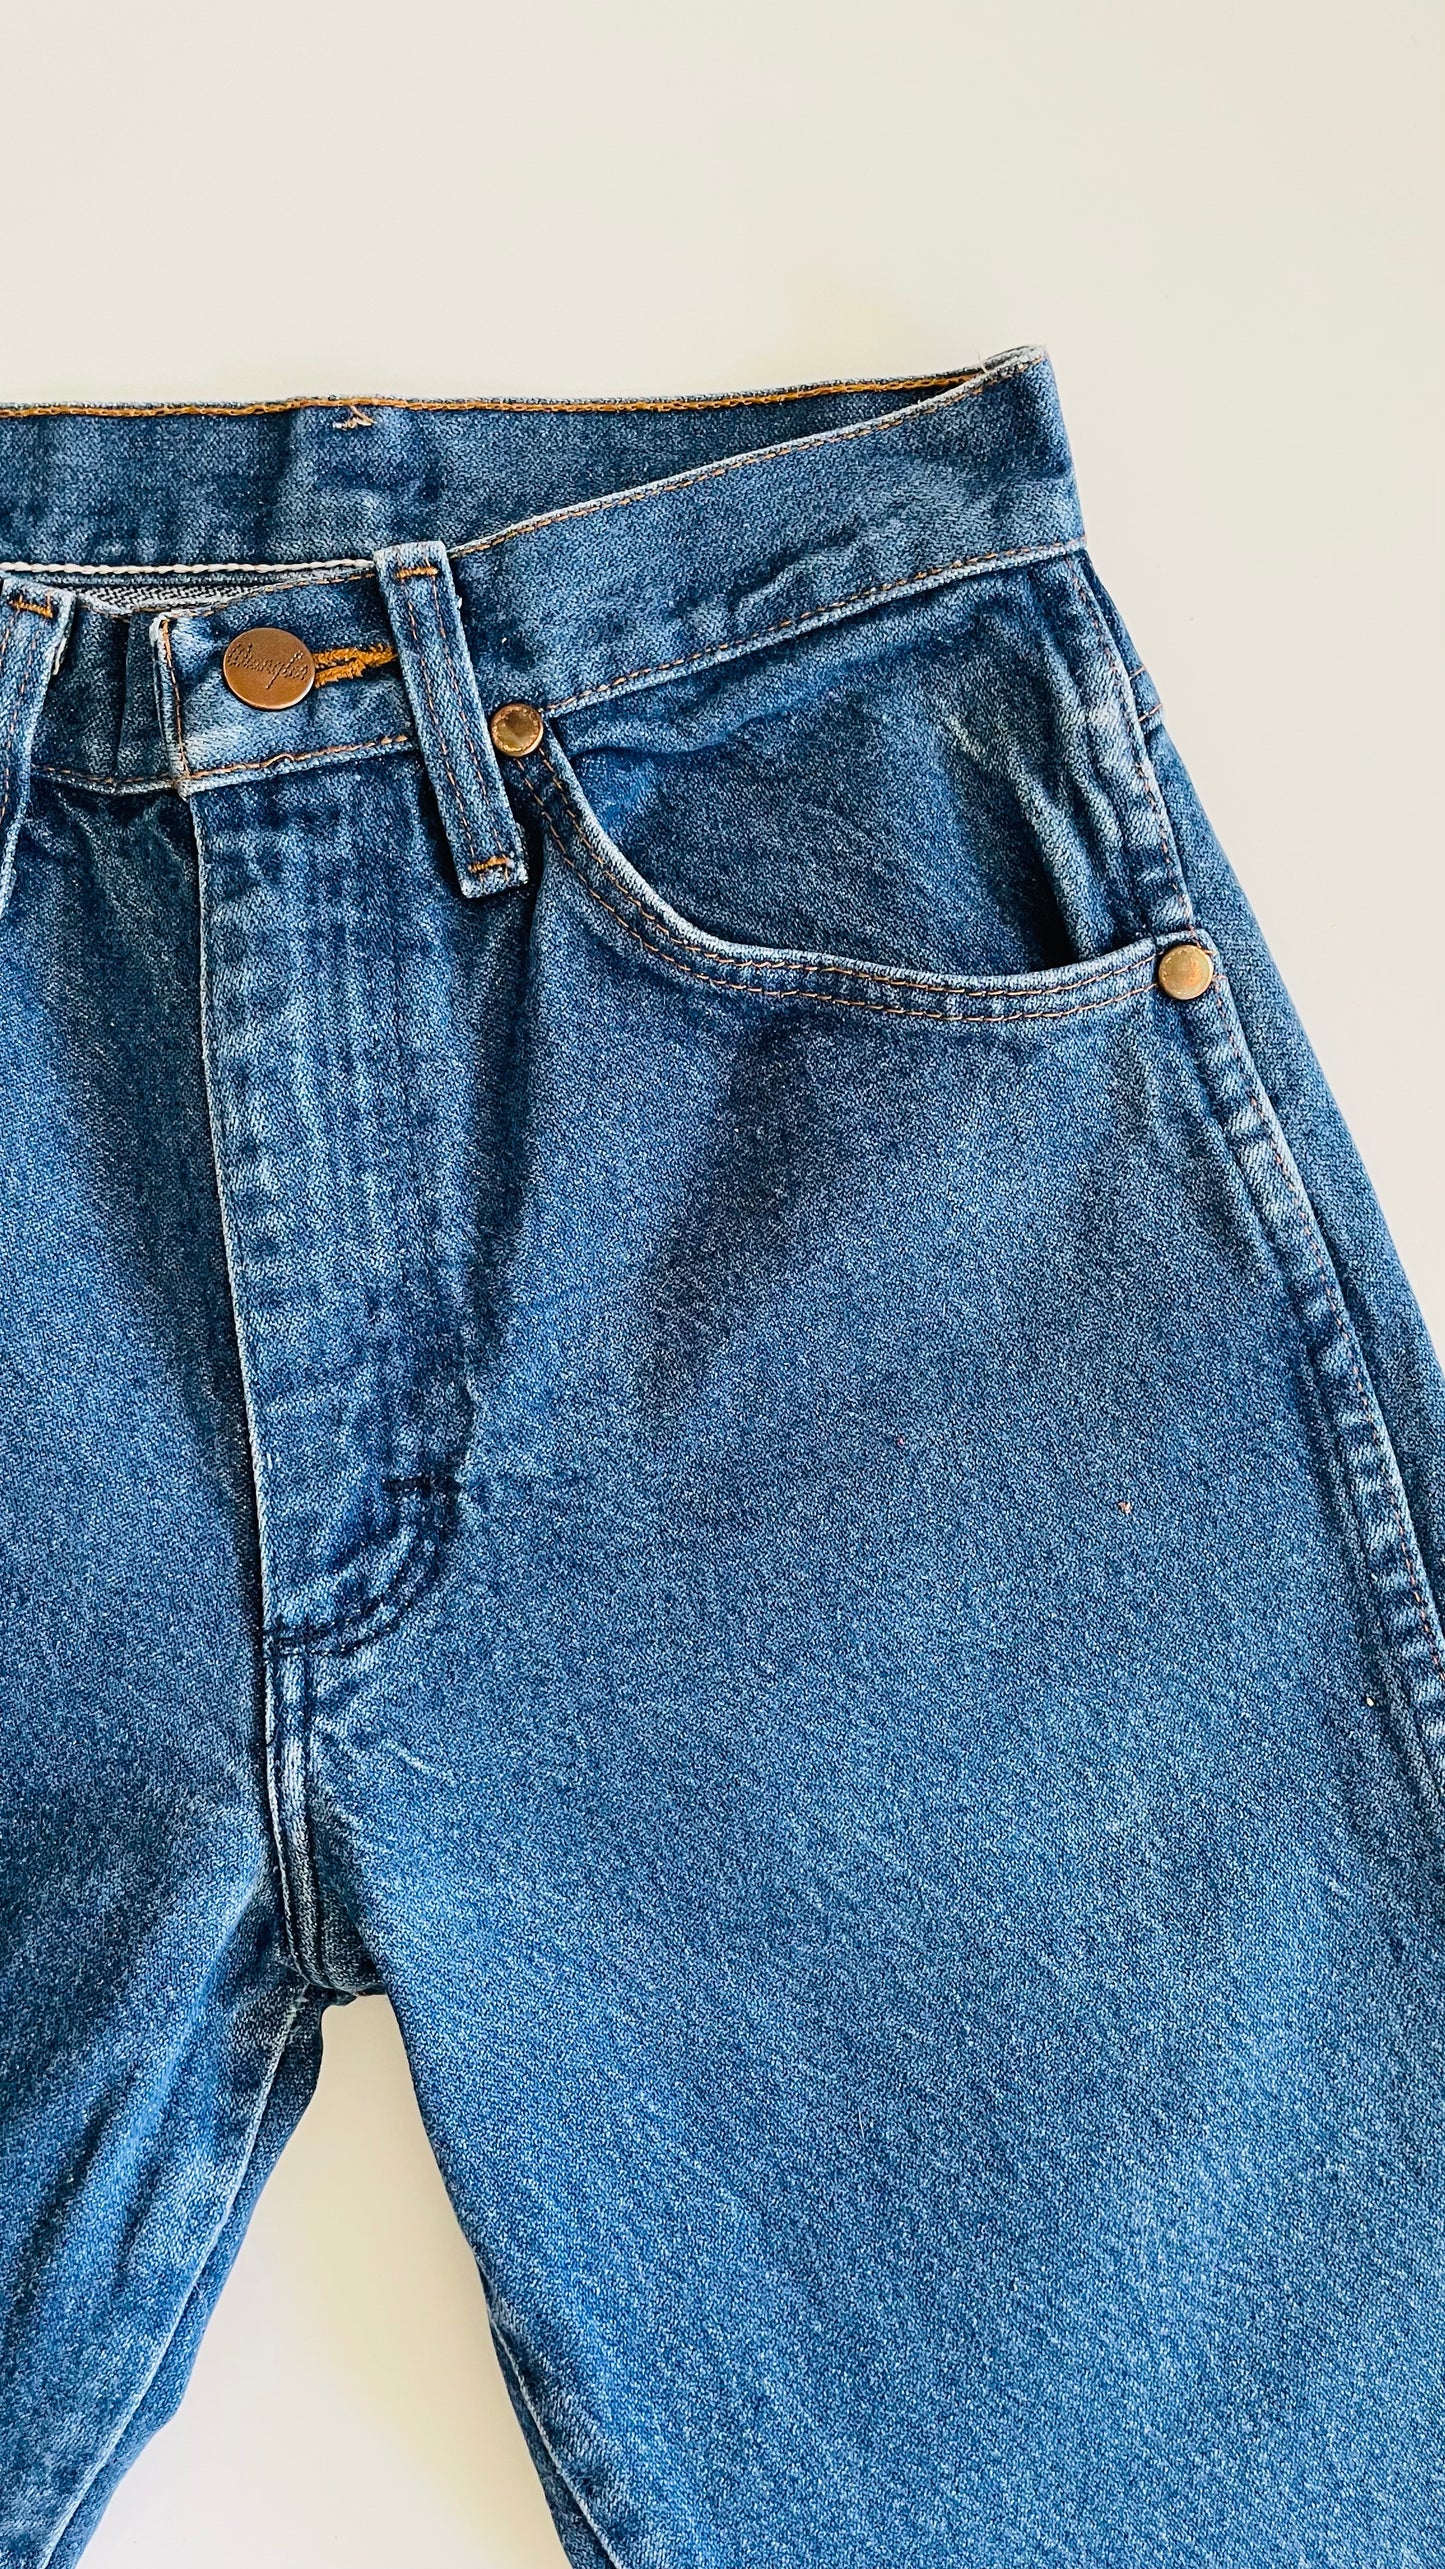 Vintage Wrangler blue slim straight fit jeans - Size 1 x 34